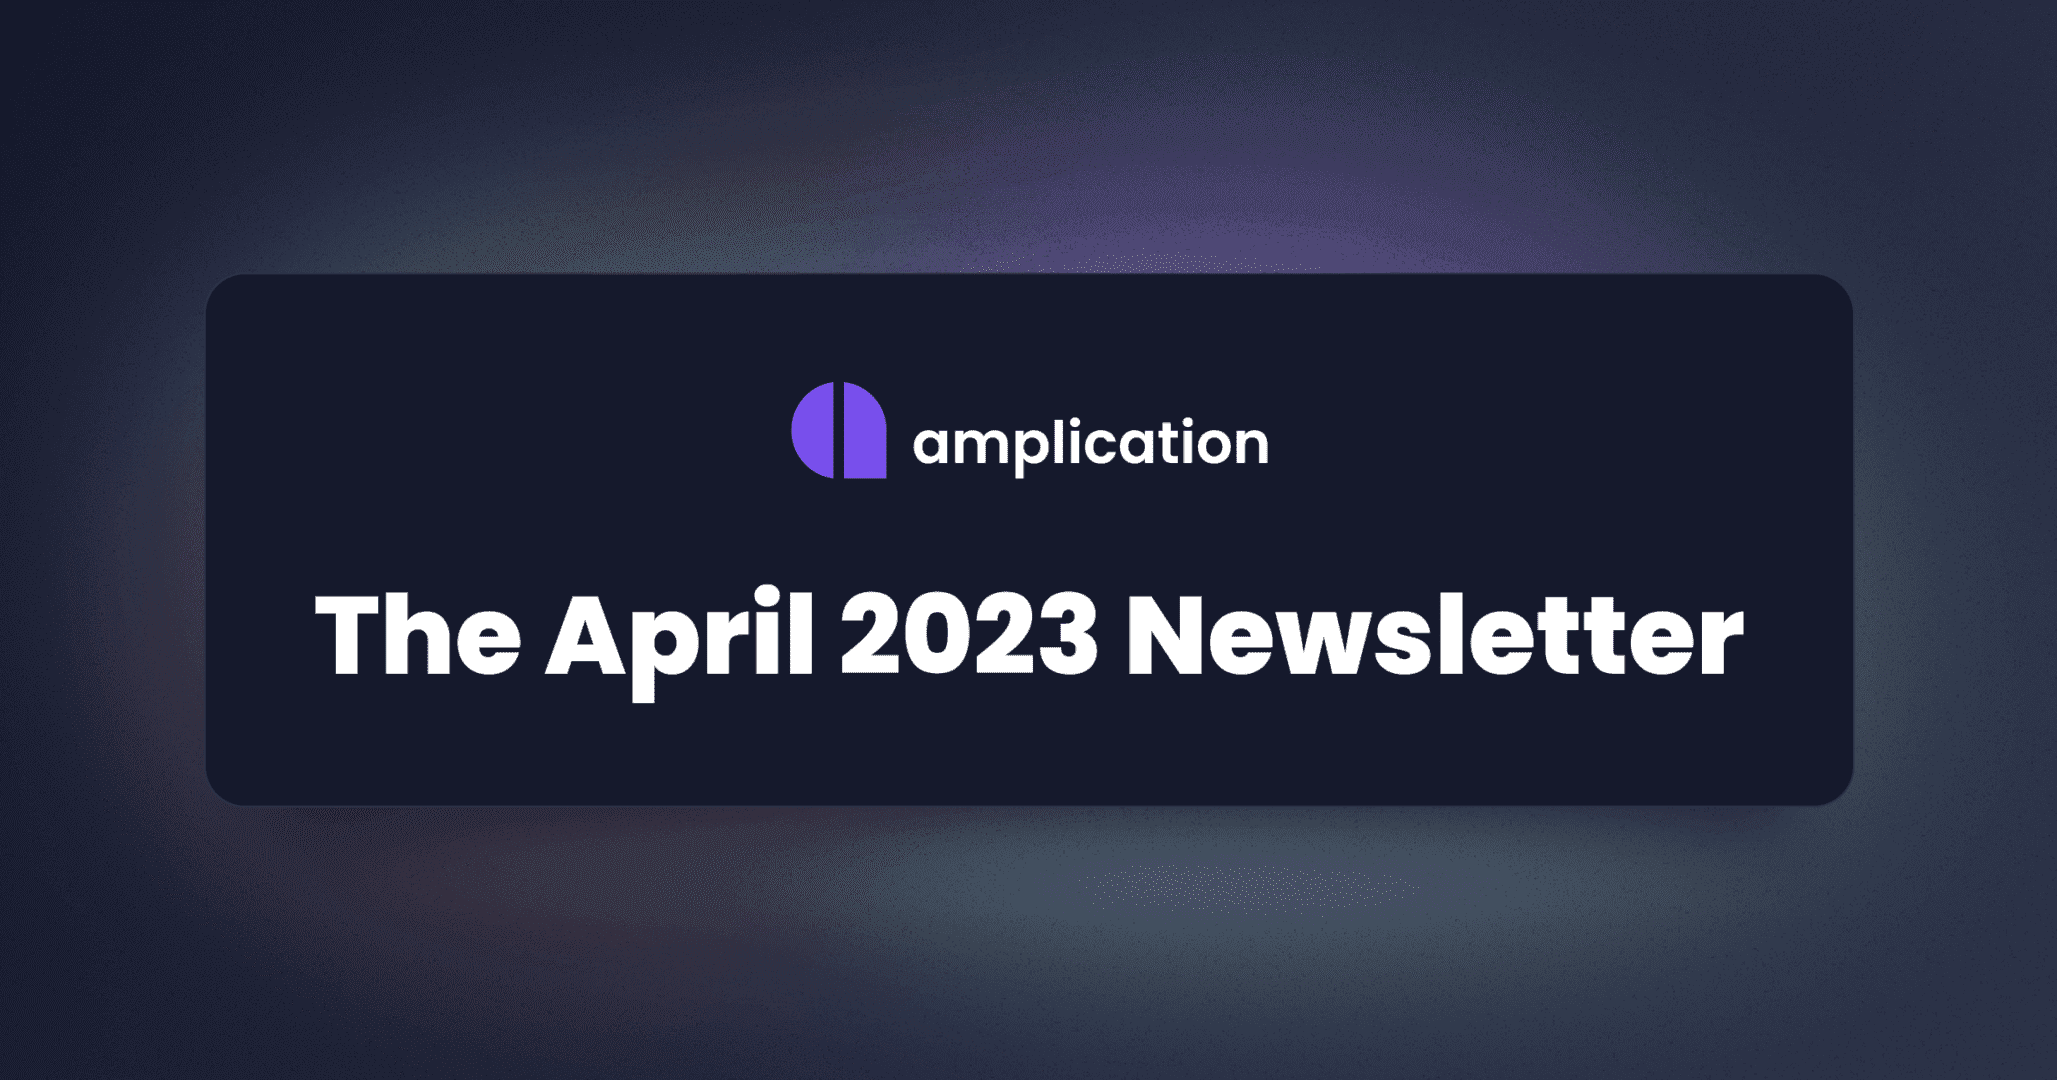 The April 2023 Newsletter